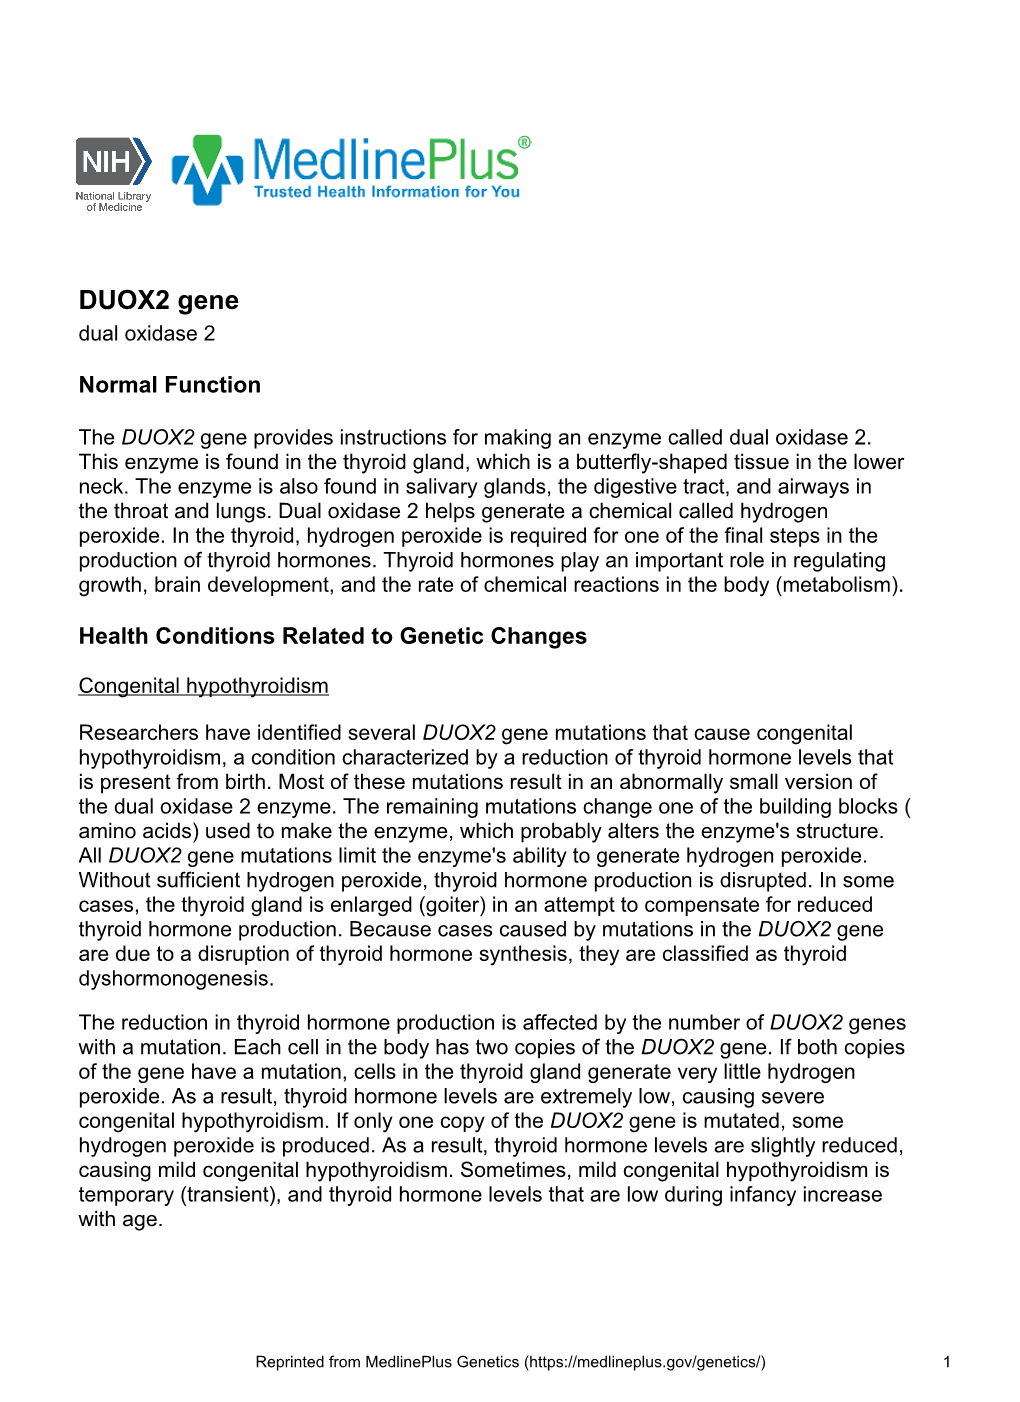 DUOX2 Gene Dual Oxidase 2